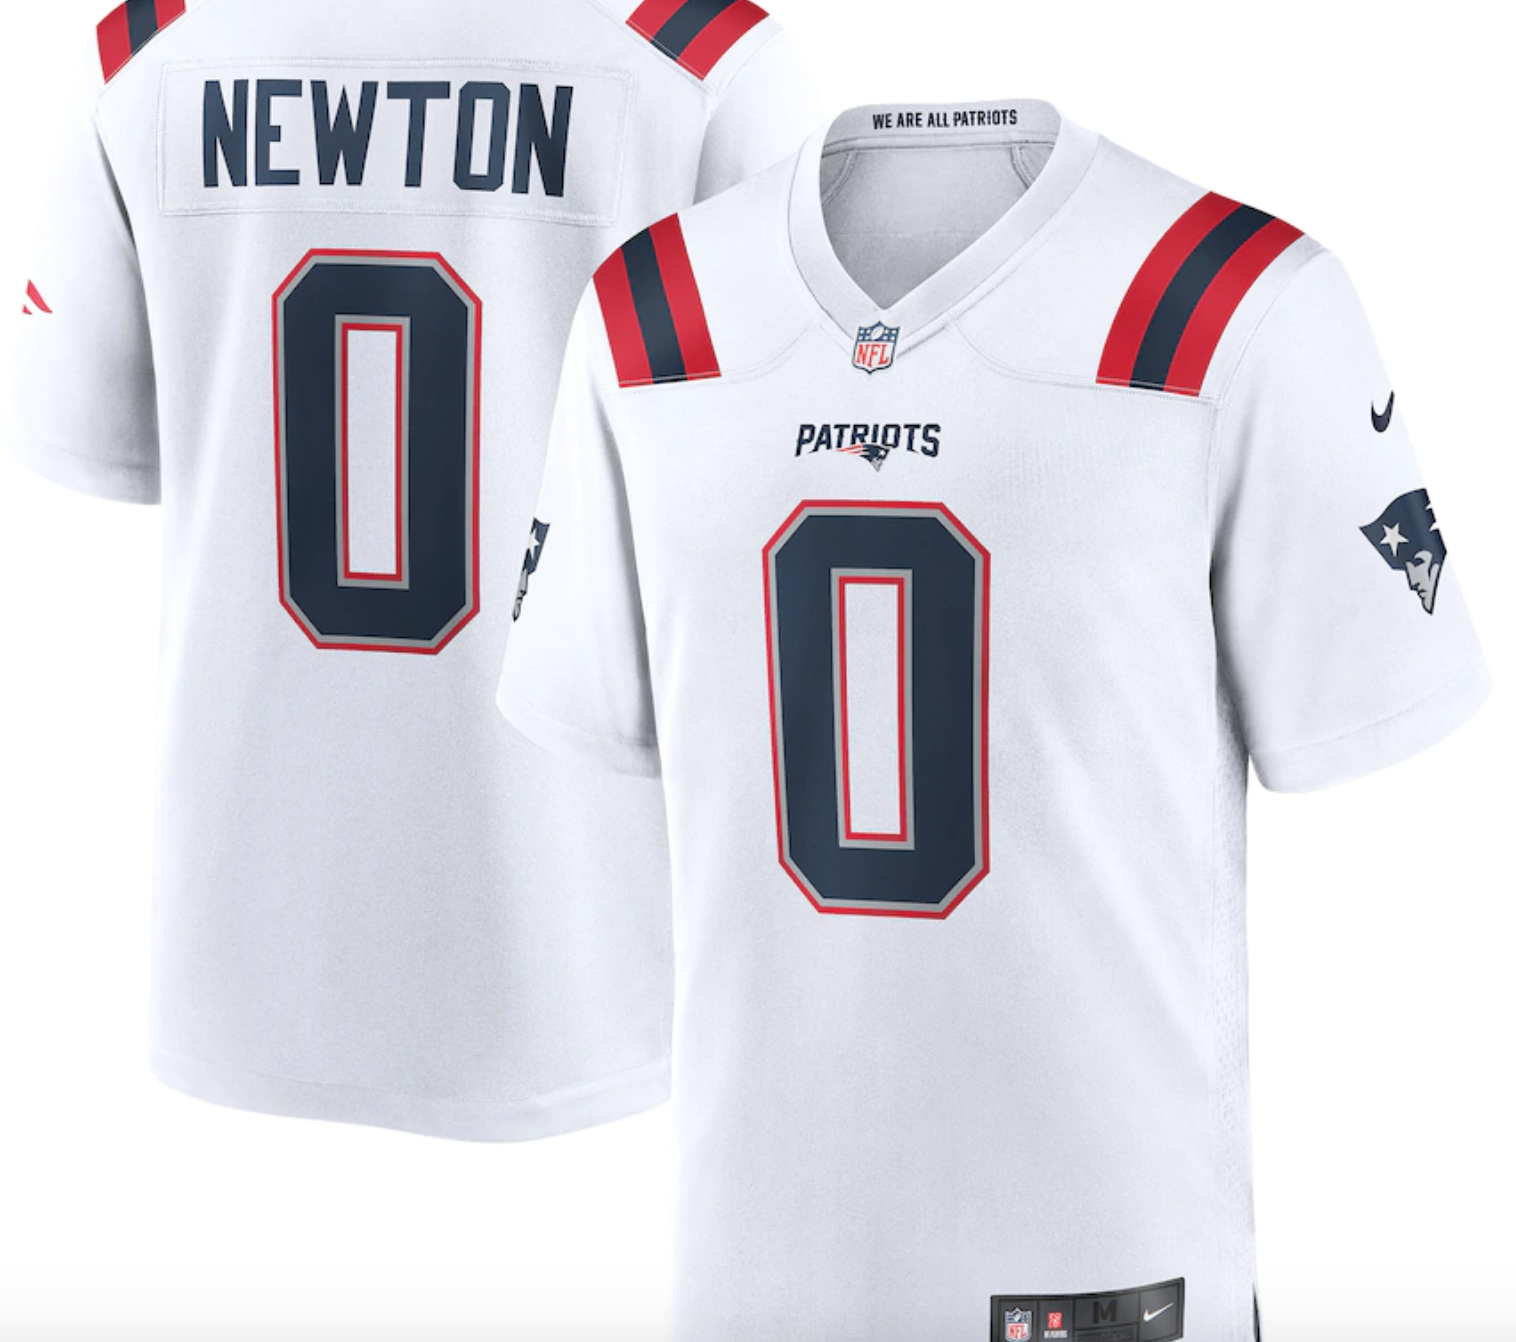 Cam Newton Jersey, New England Patriots Jerseys, Where to get them